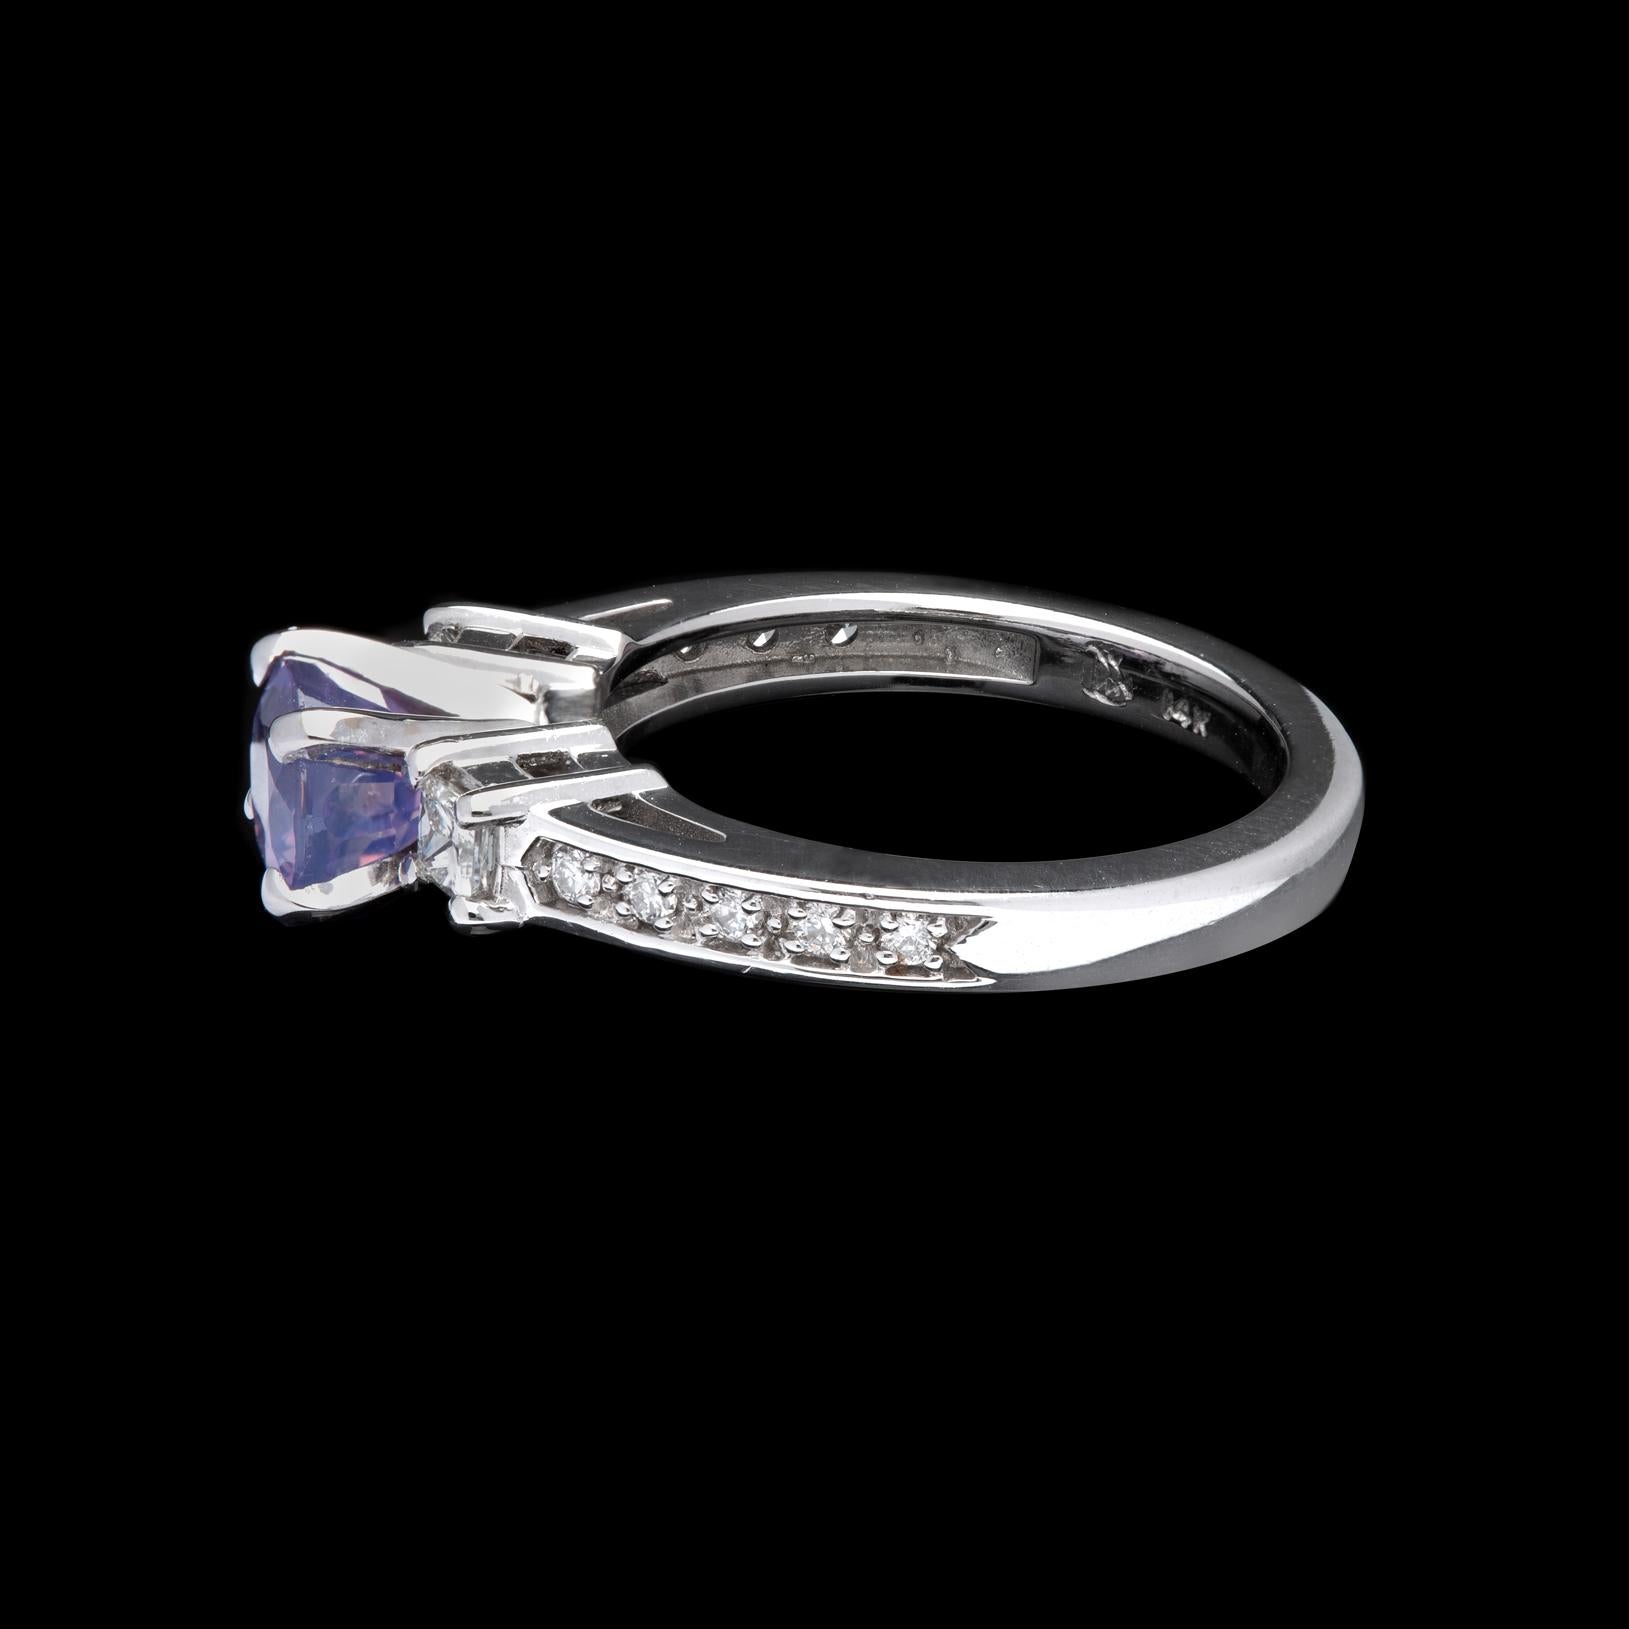 Oval Cut Unique Sapphire and White Gold Diamond Ring